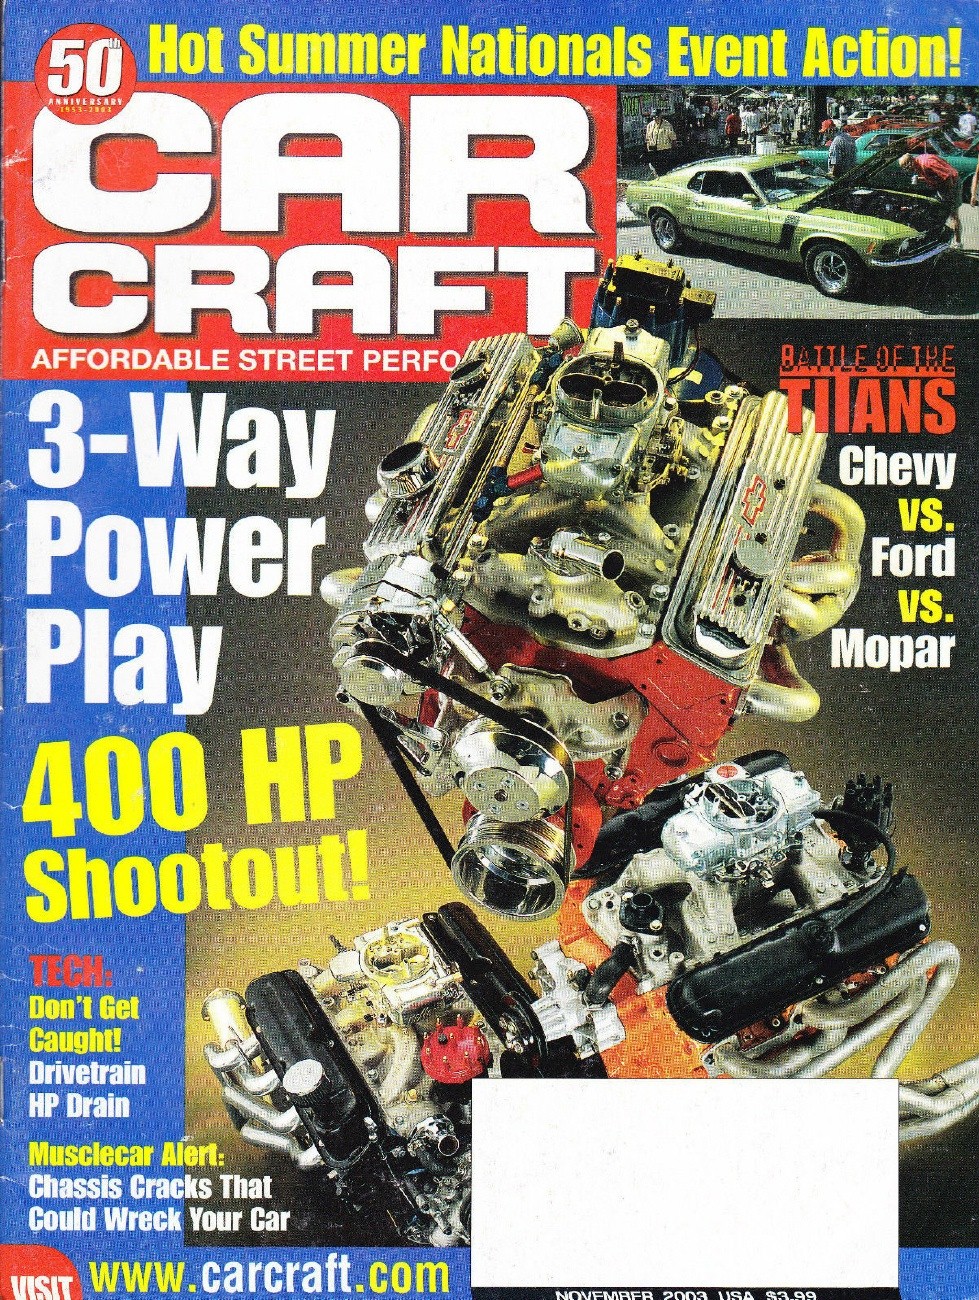 Car Craft November 2003 Issue